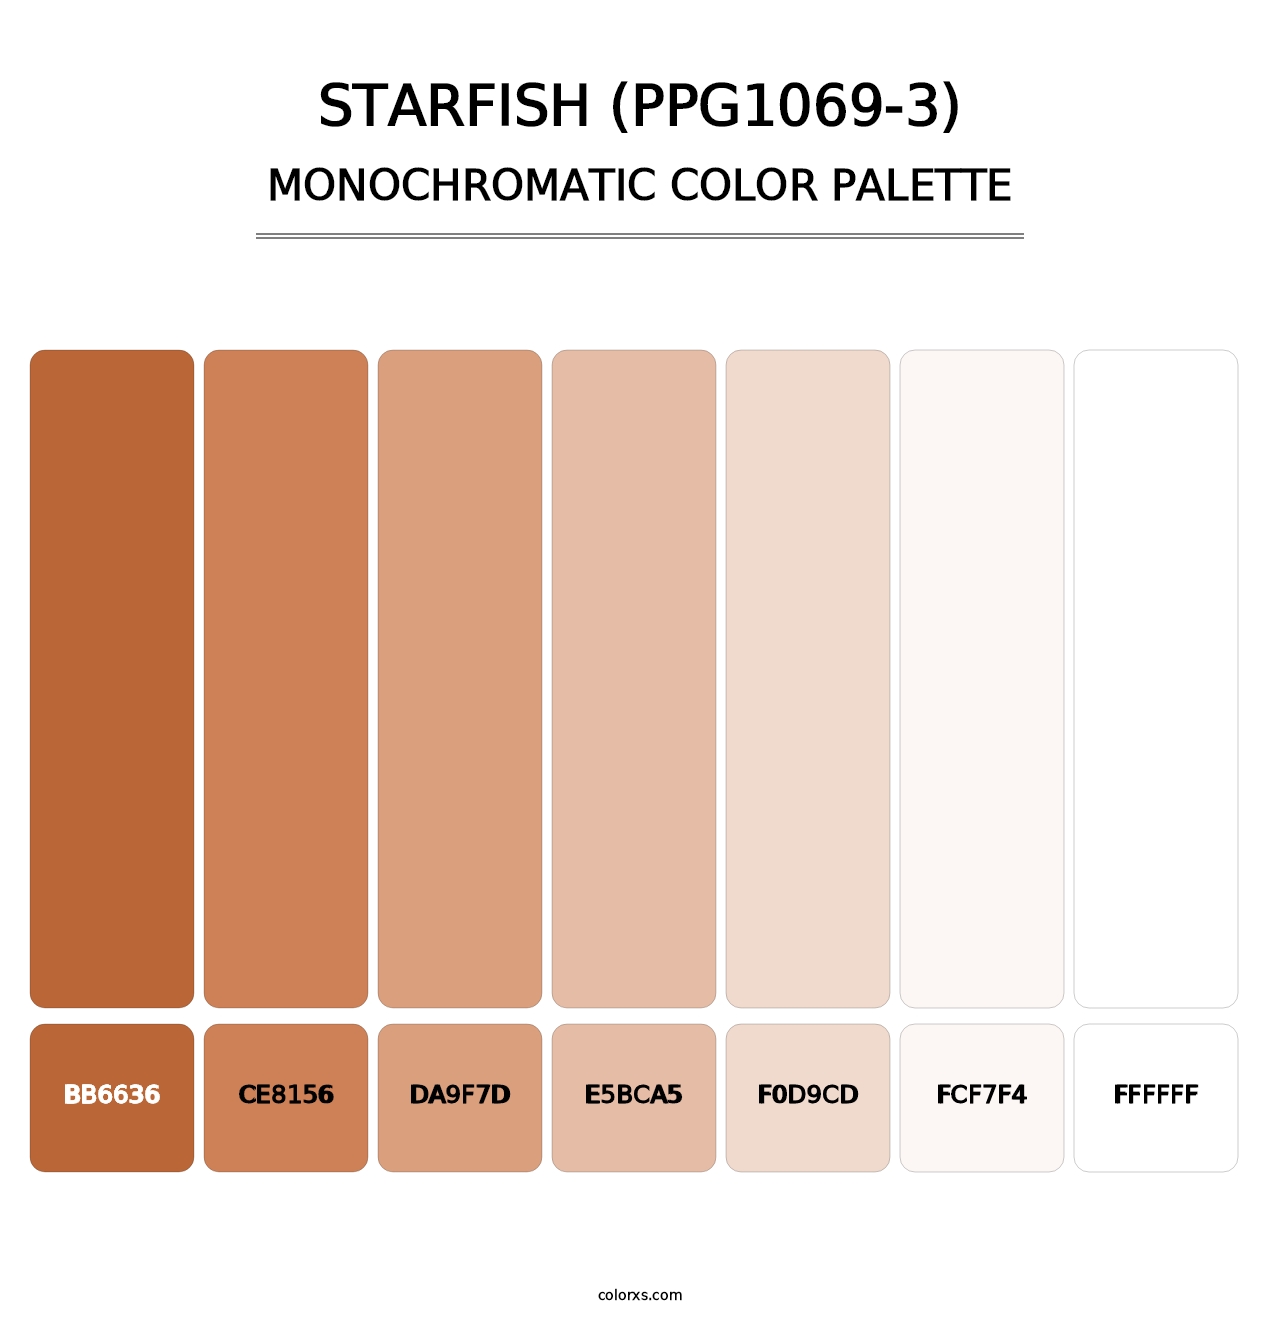 Starfish (PPG1069-3) - Monochromatic Color Palette